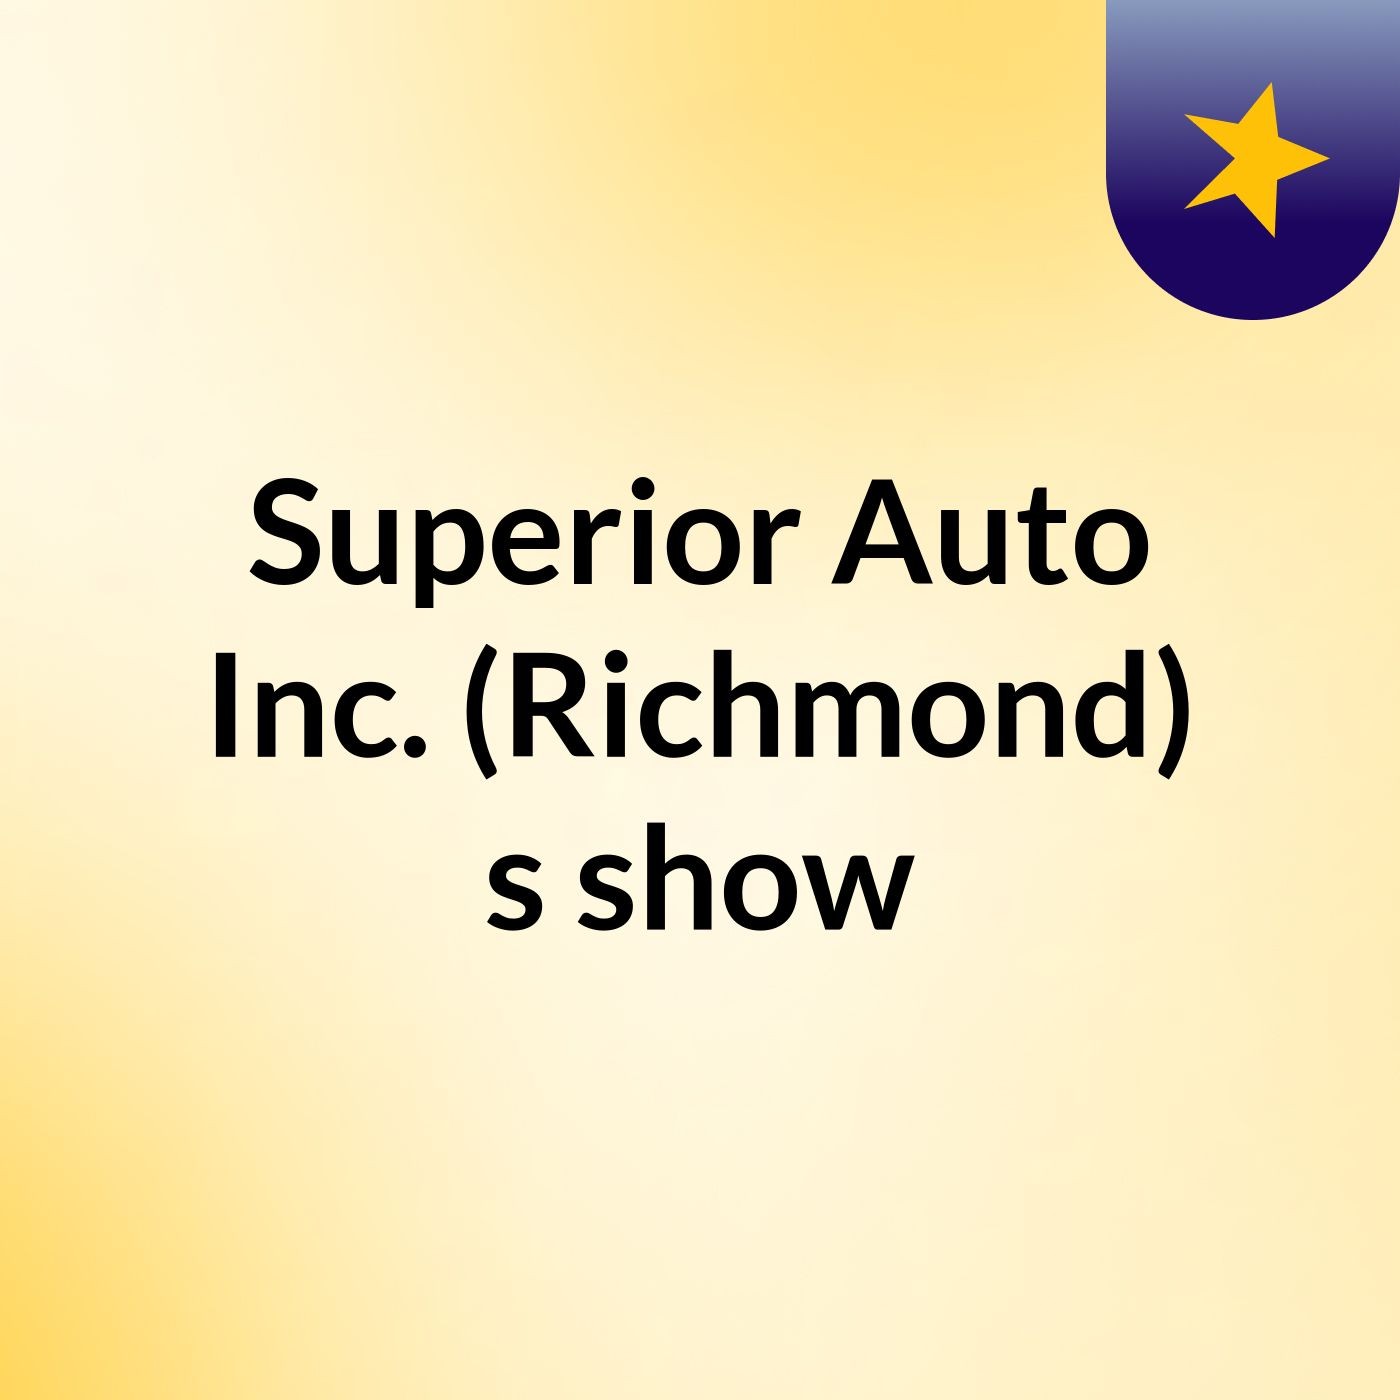 Superior Auto Inc. (Richmond)'s show